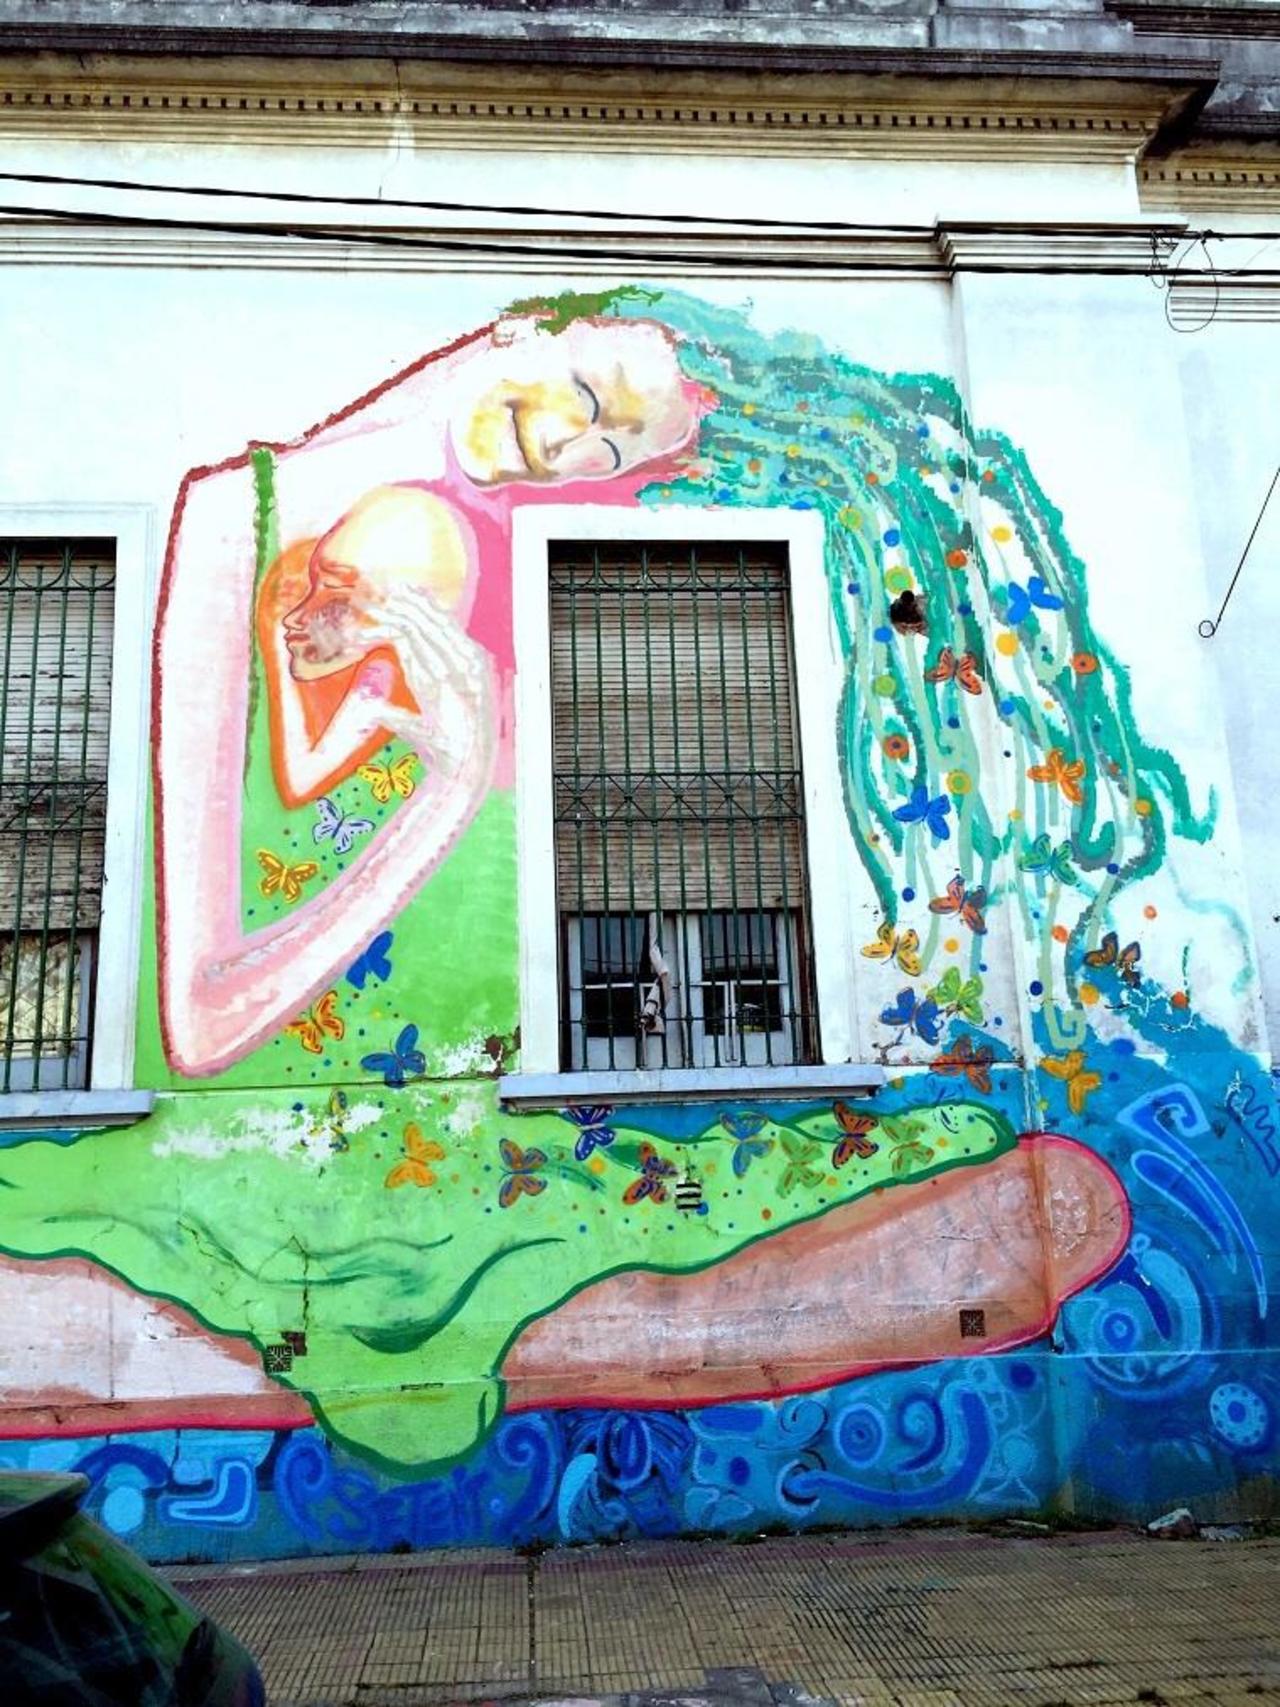 #Graffiti de hoy: << Loving mother >> calles 66, 8y9 #LaPlata #Argentina #StreetArt #UrbanArt #ArteUrbano https://t.co/zmIhtPNKpU